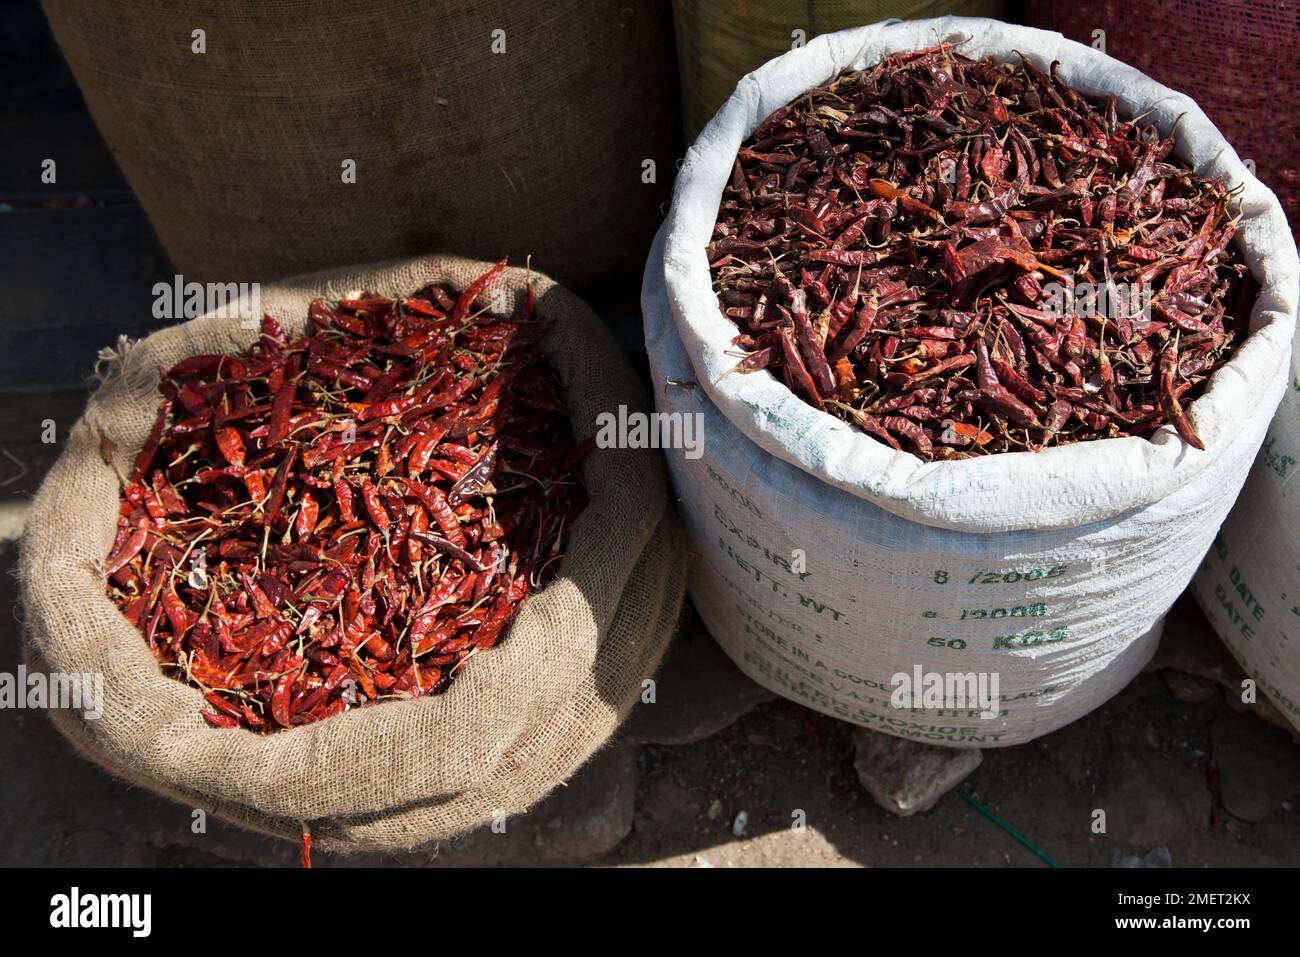 Jaffna Town, North Eastern Province, Produce Market, Sri Lanka, sacks of spices (chillies) Stock Photo